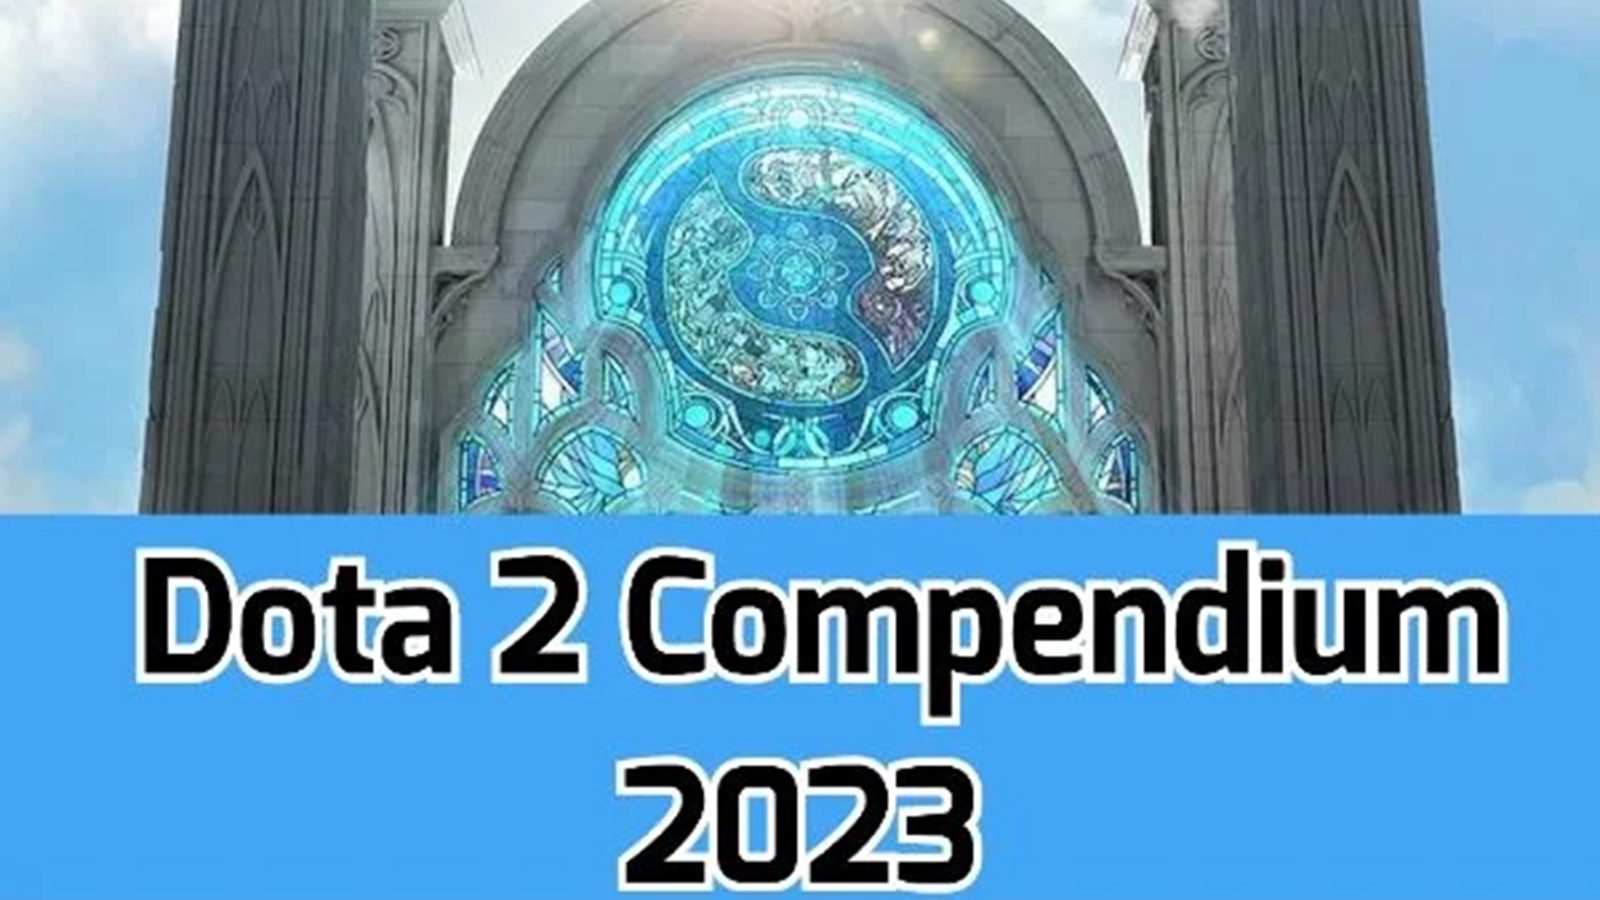 Dota 2 2023 Compendium: A Treasure Trove of Rewards